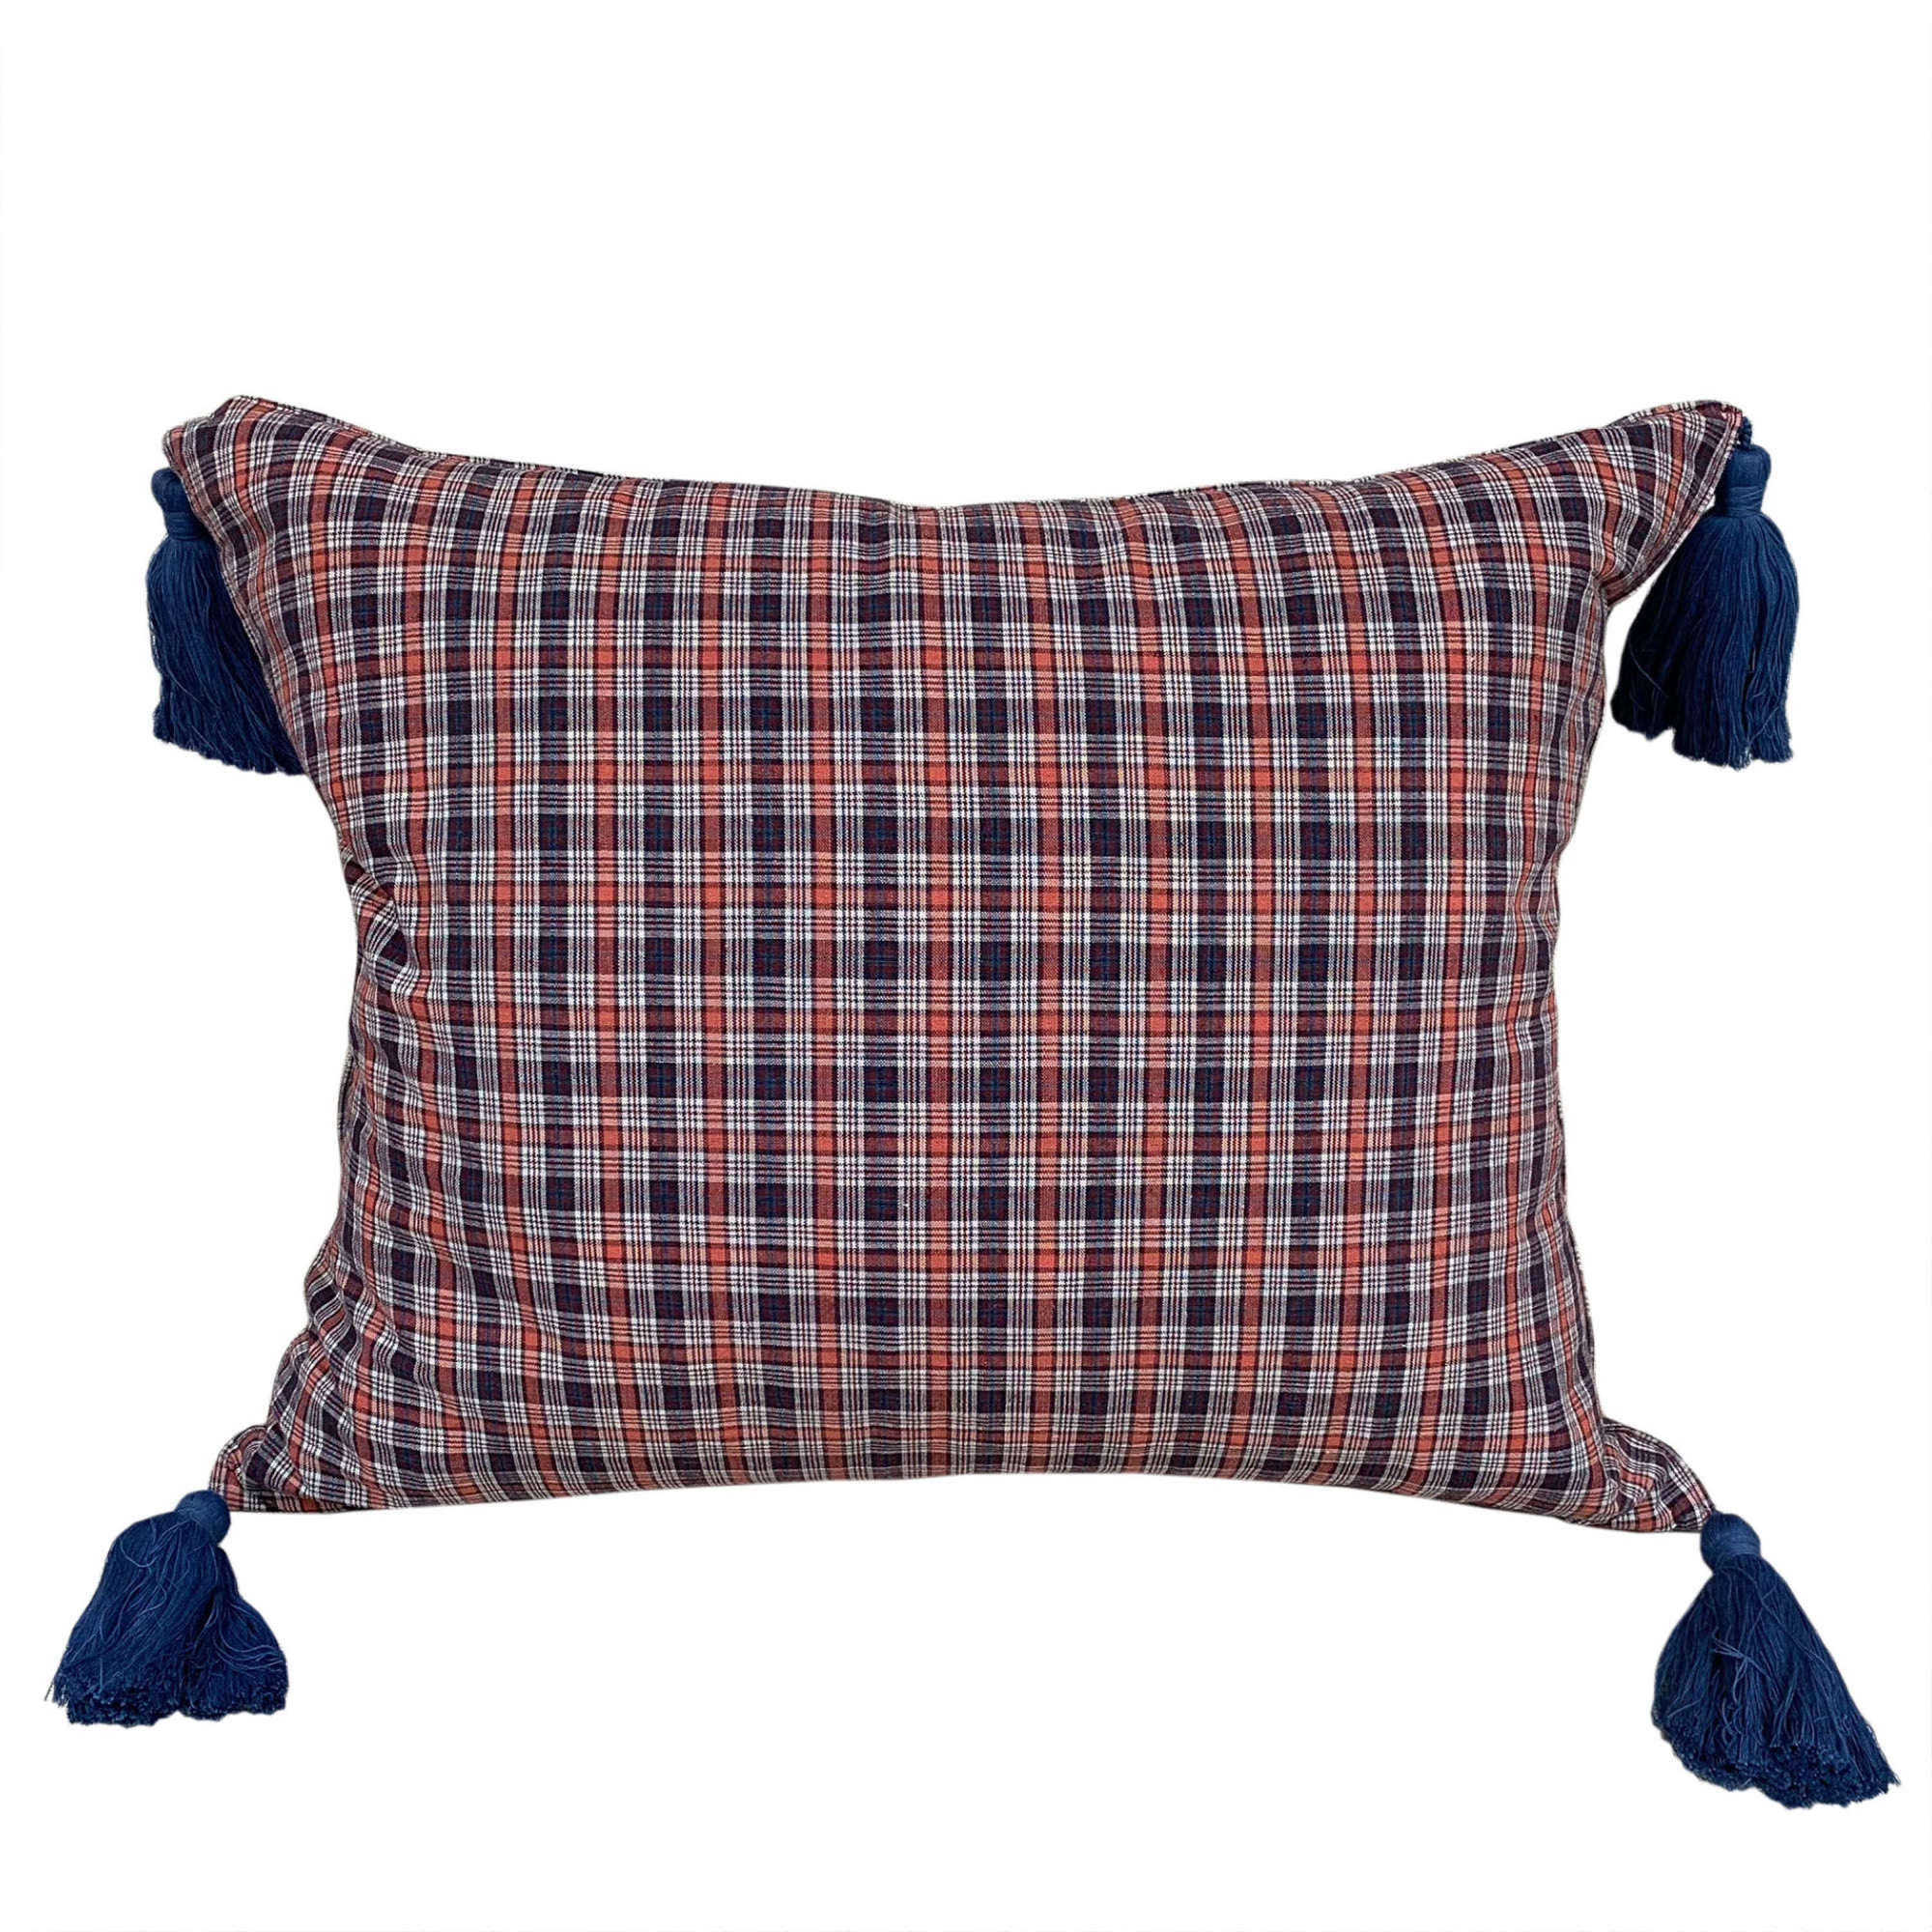 Lombok cushions, plaid